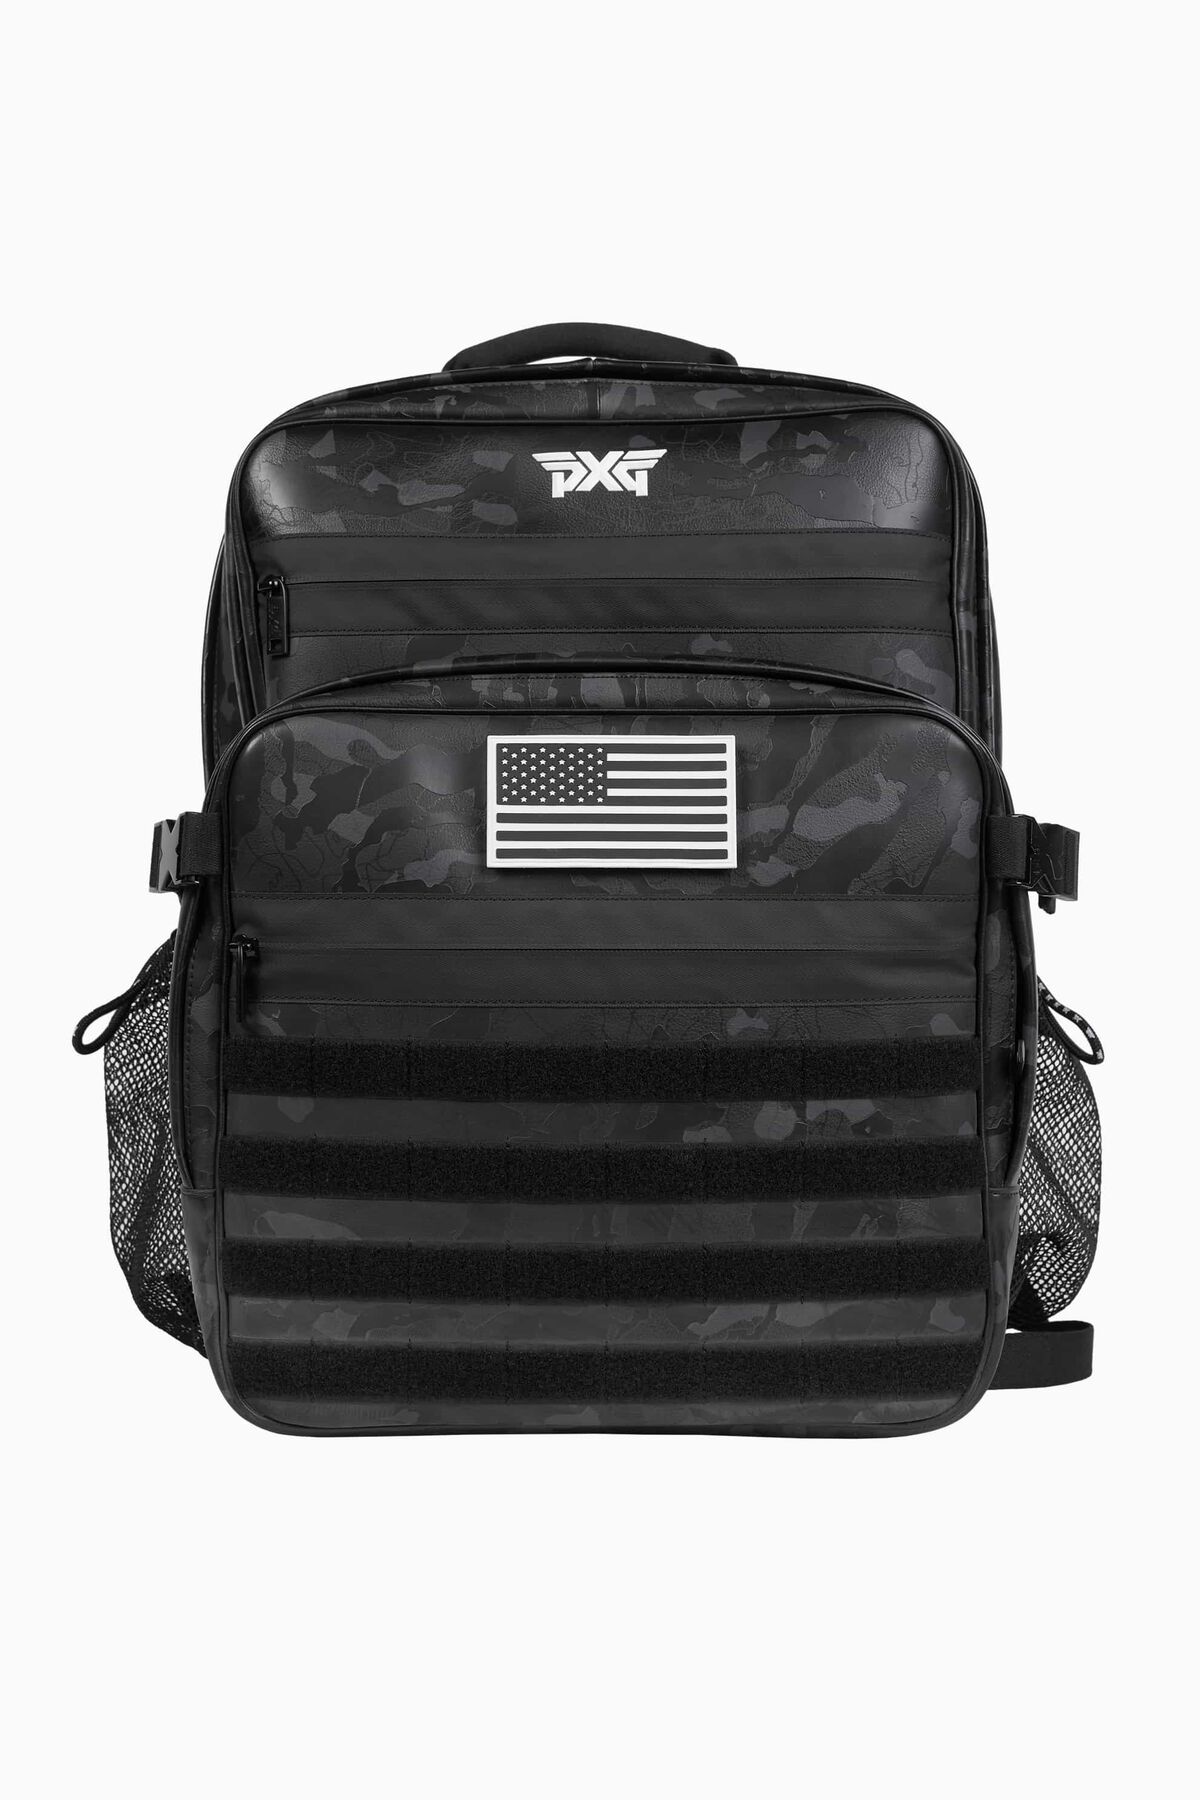 BP Tactical Backpack 